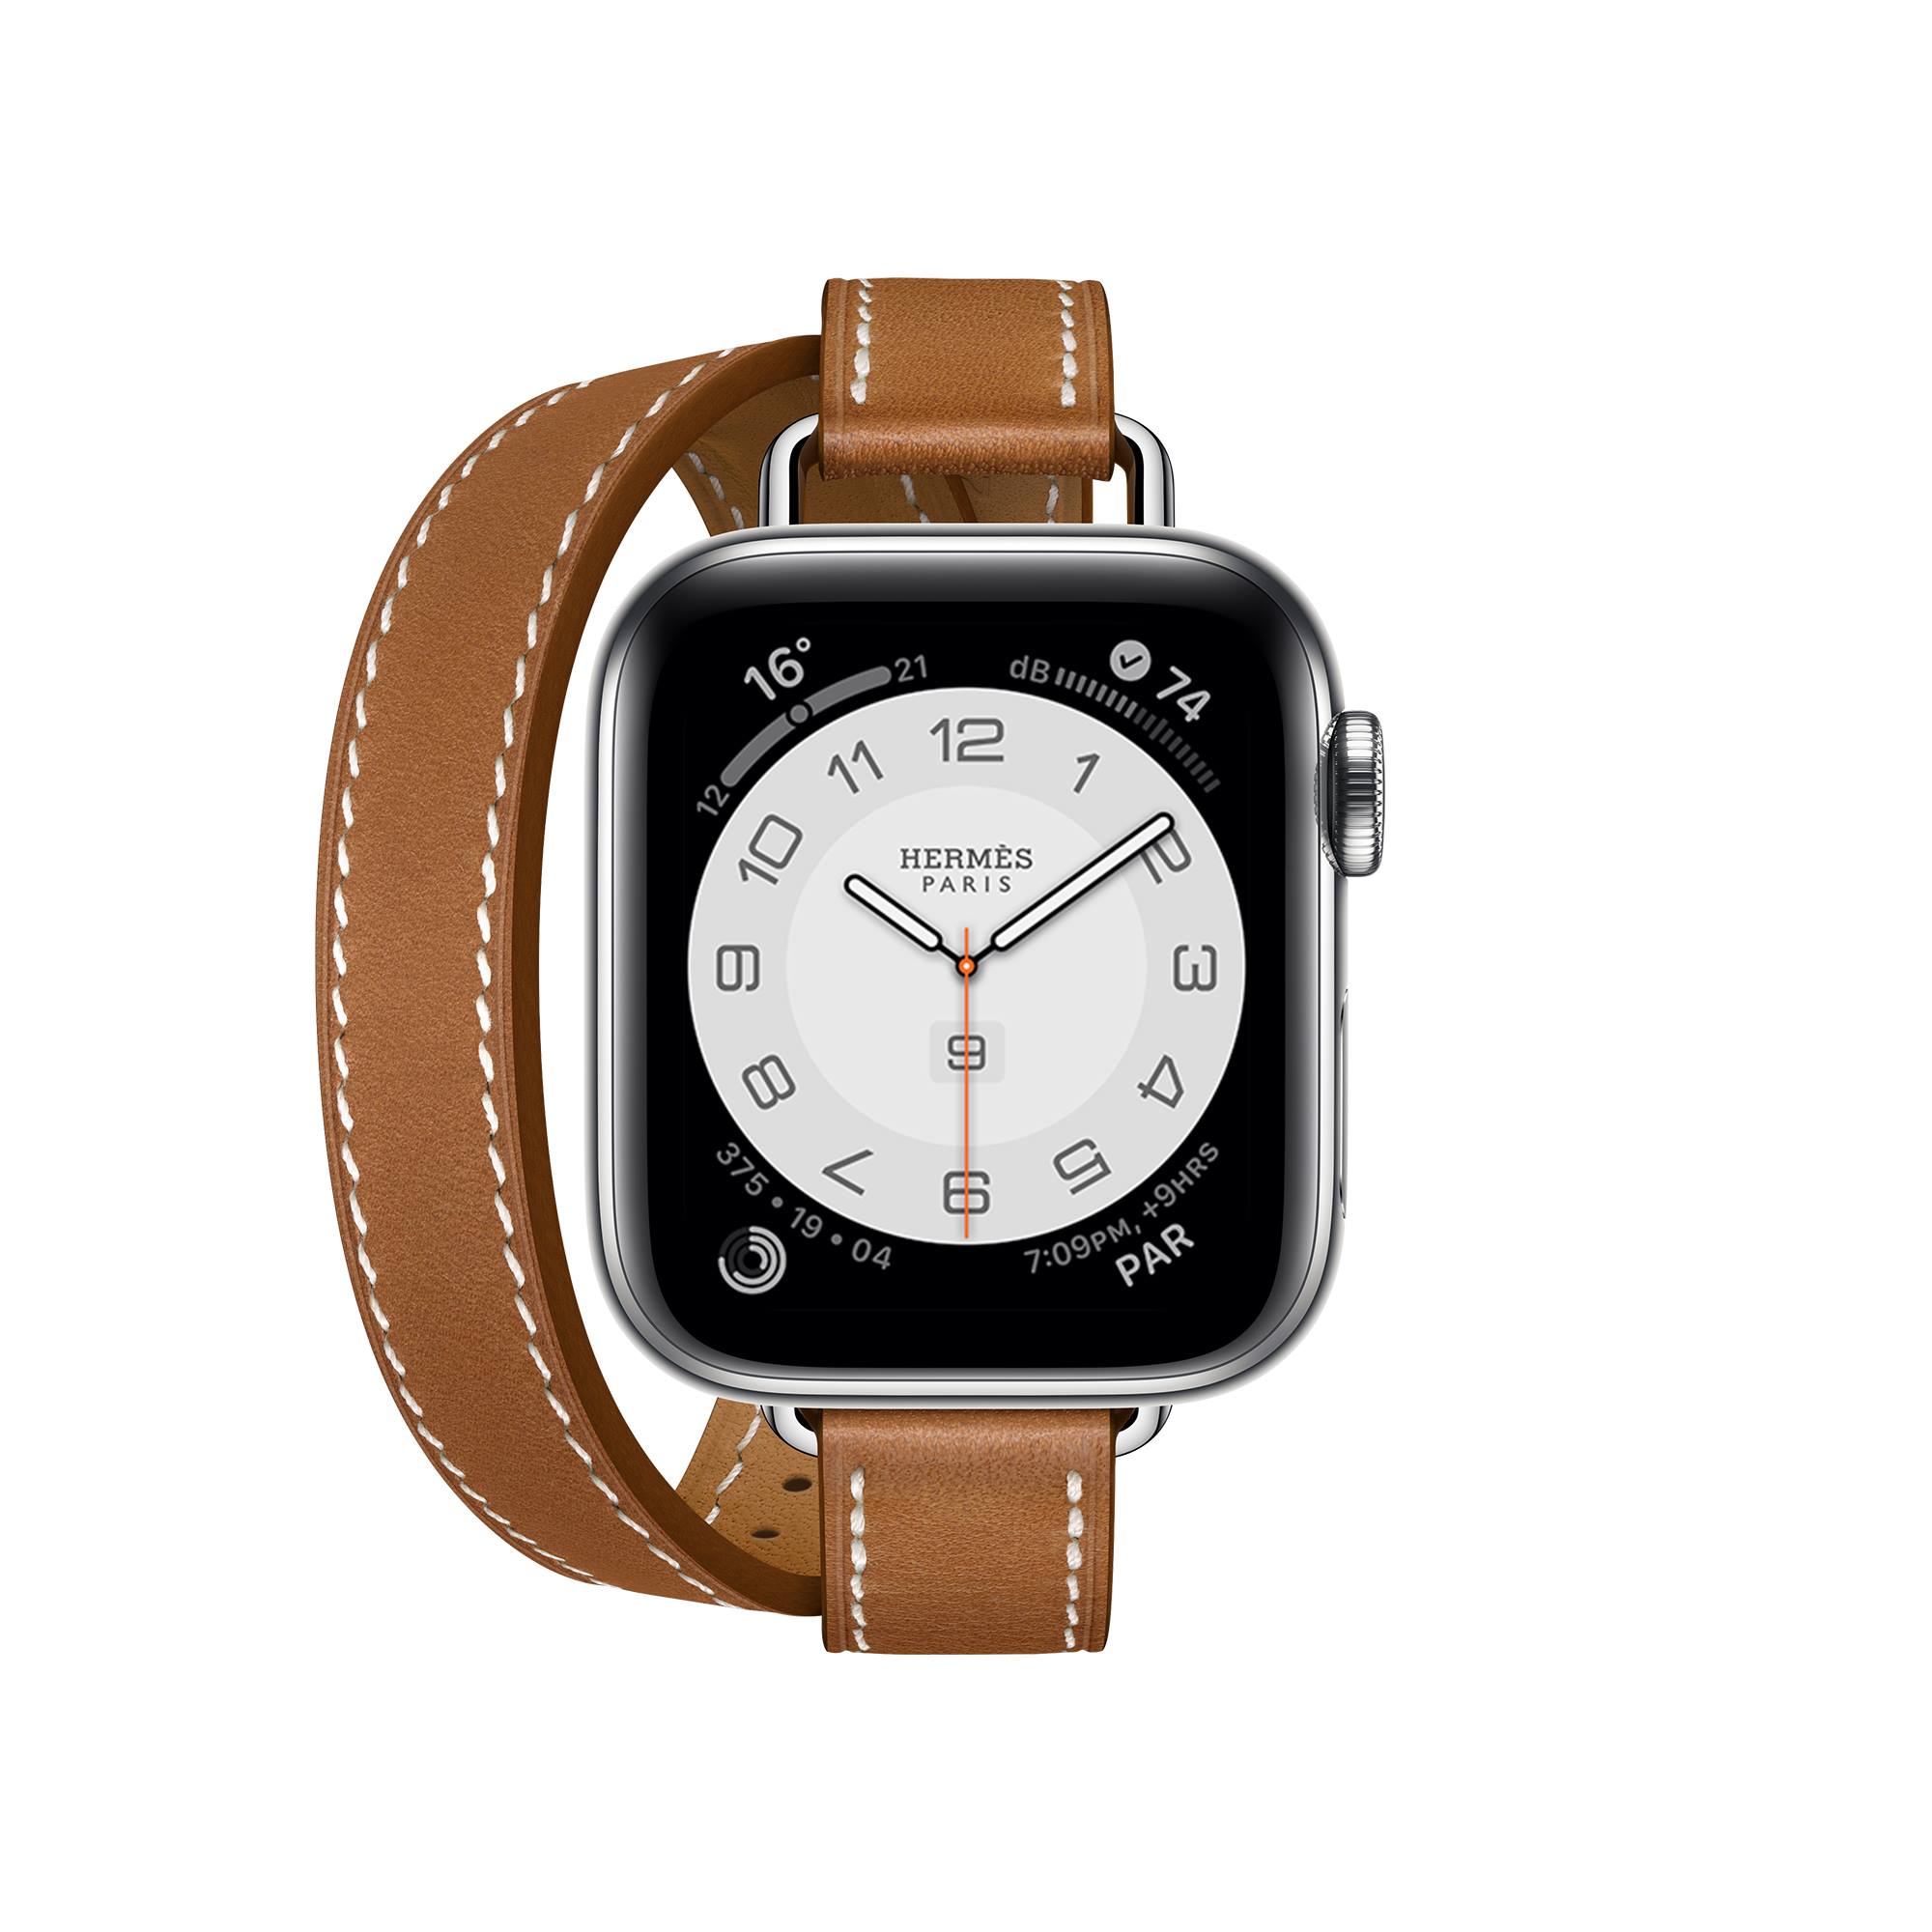 Hermes apple watch face assets - sanyglass